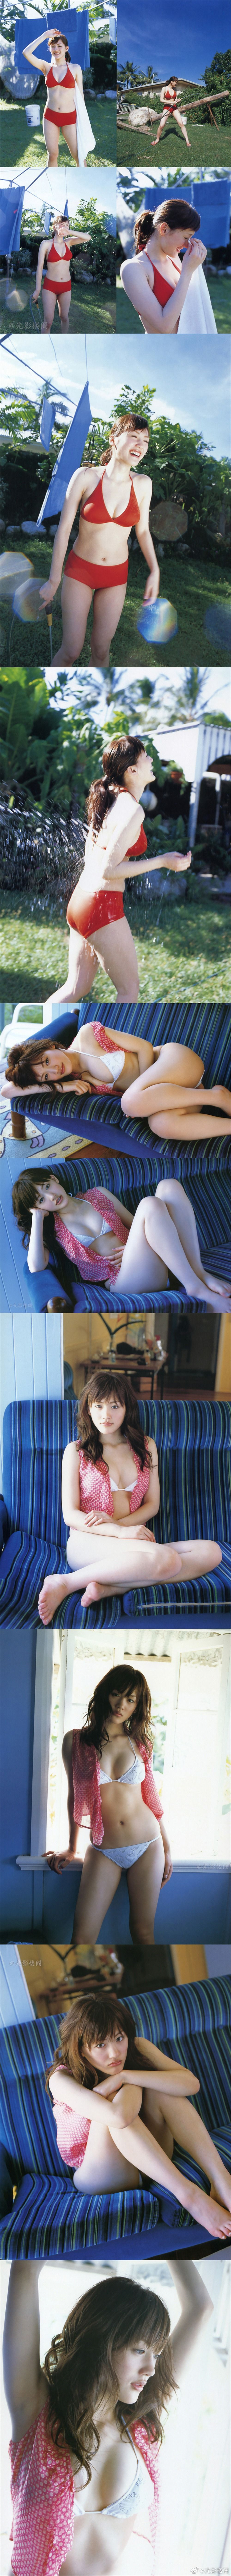 Haruka Ayase Sexy and Hottest Photos , Latest Pics